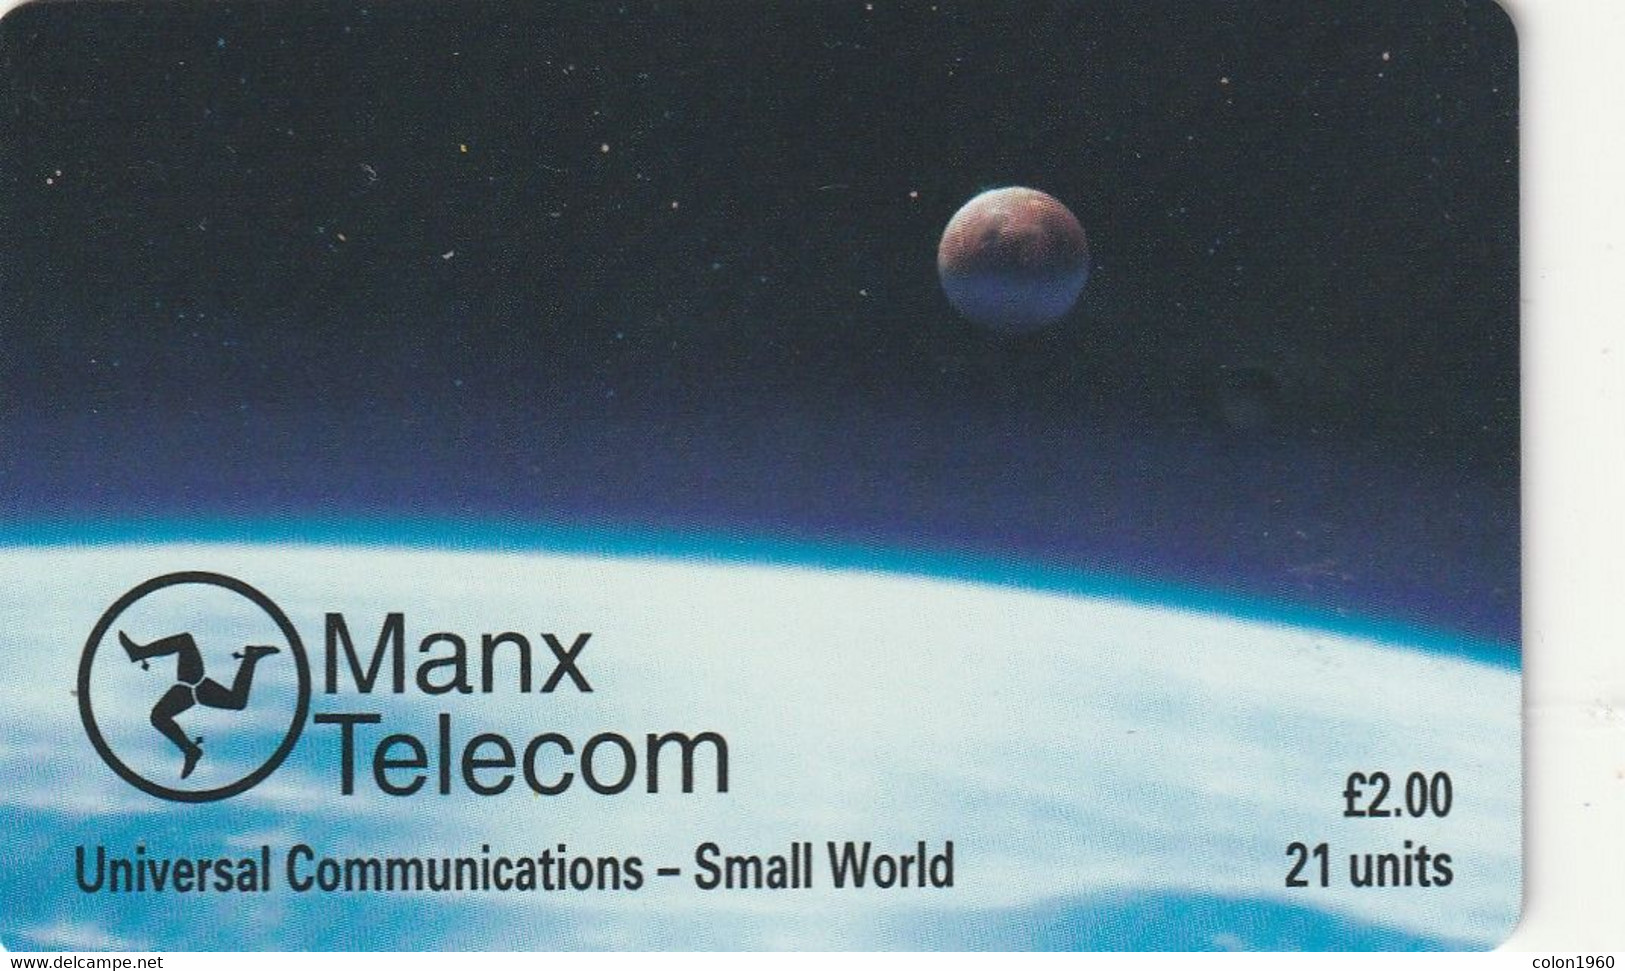 ISLE OF MAN. ESPACIO - SPACE. Universal Communications - Small World (With Letter B). 1997. IM-TEL-0121a. (028). - Eiland Man